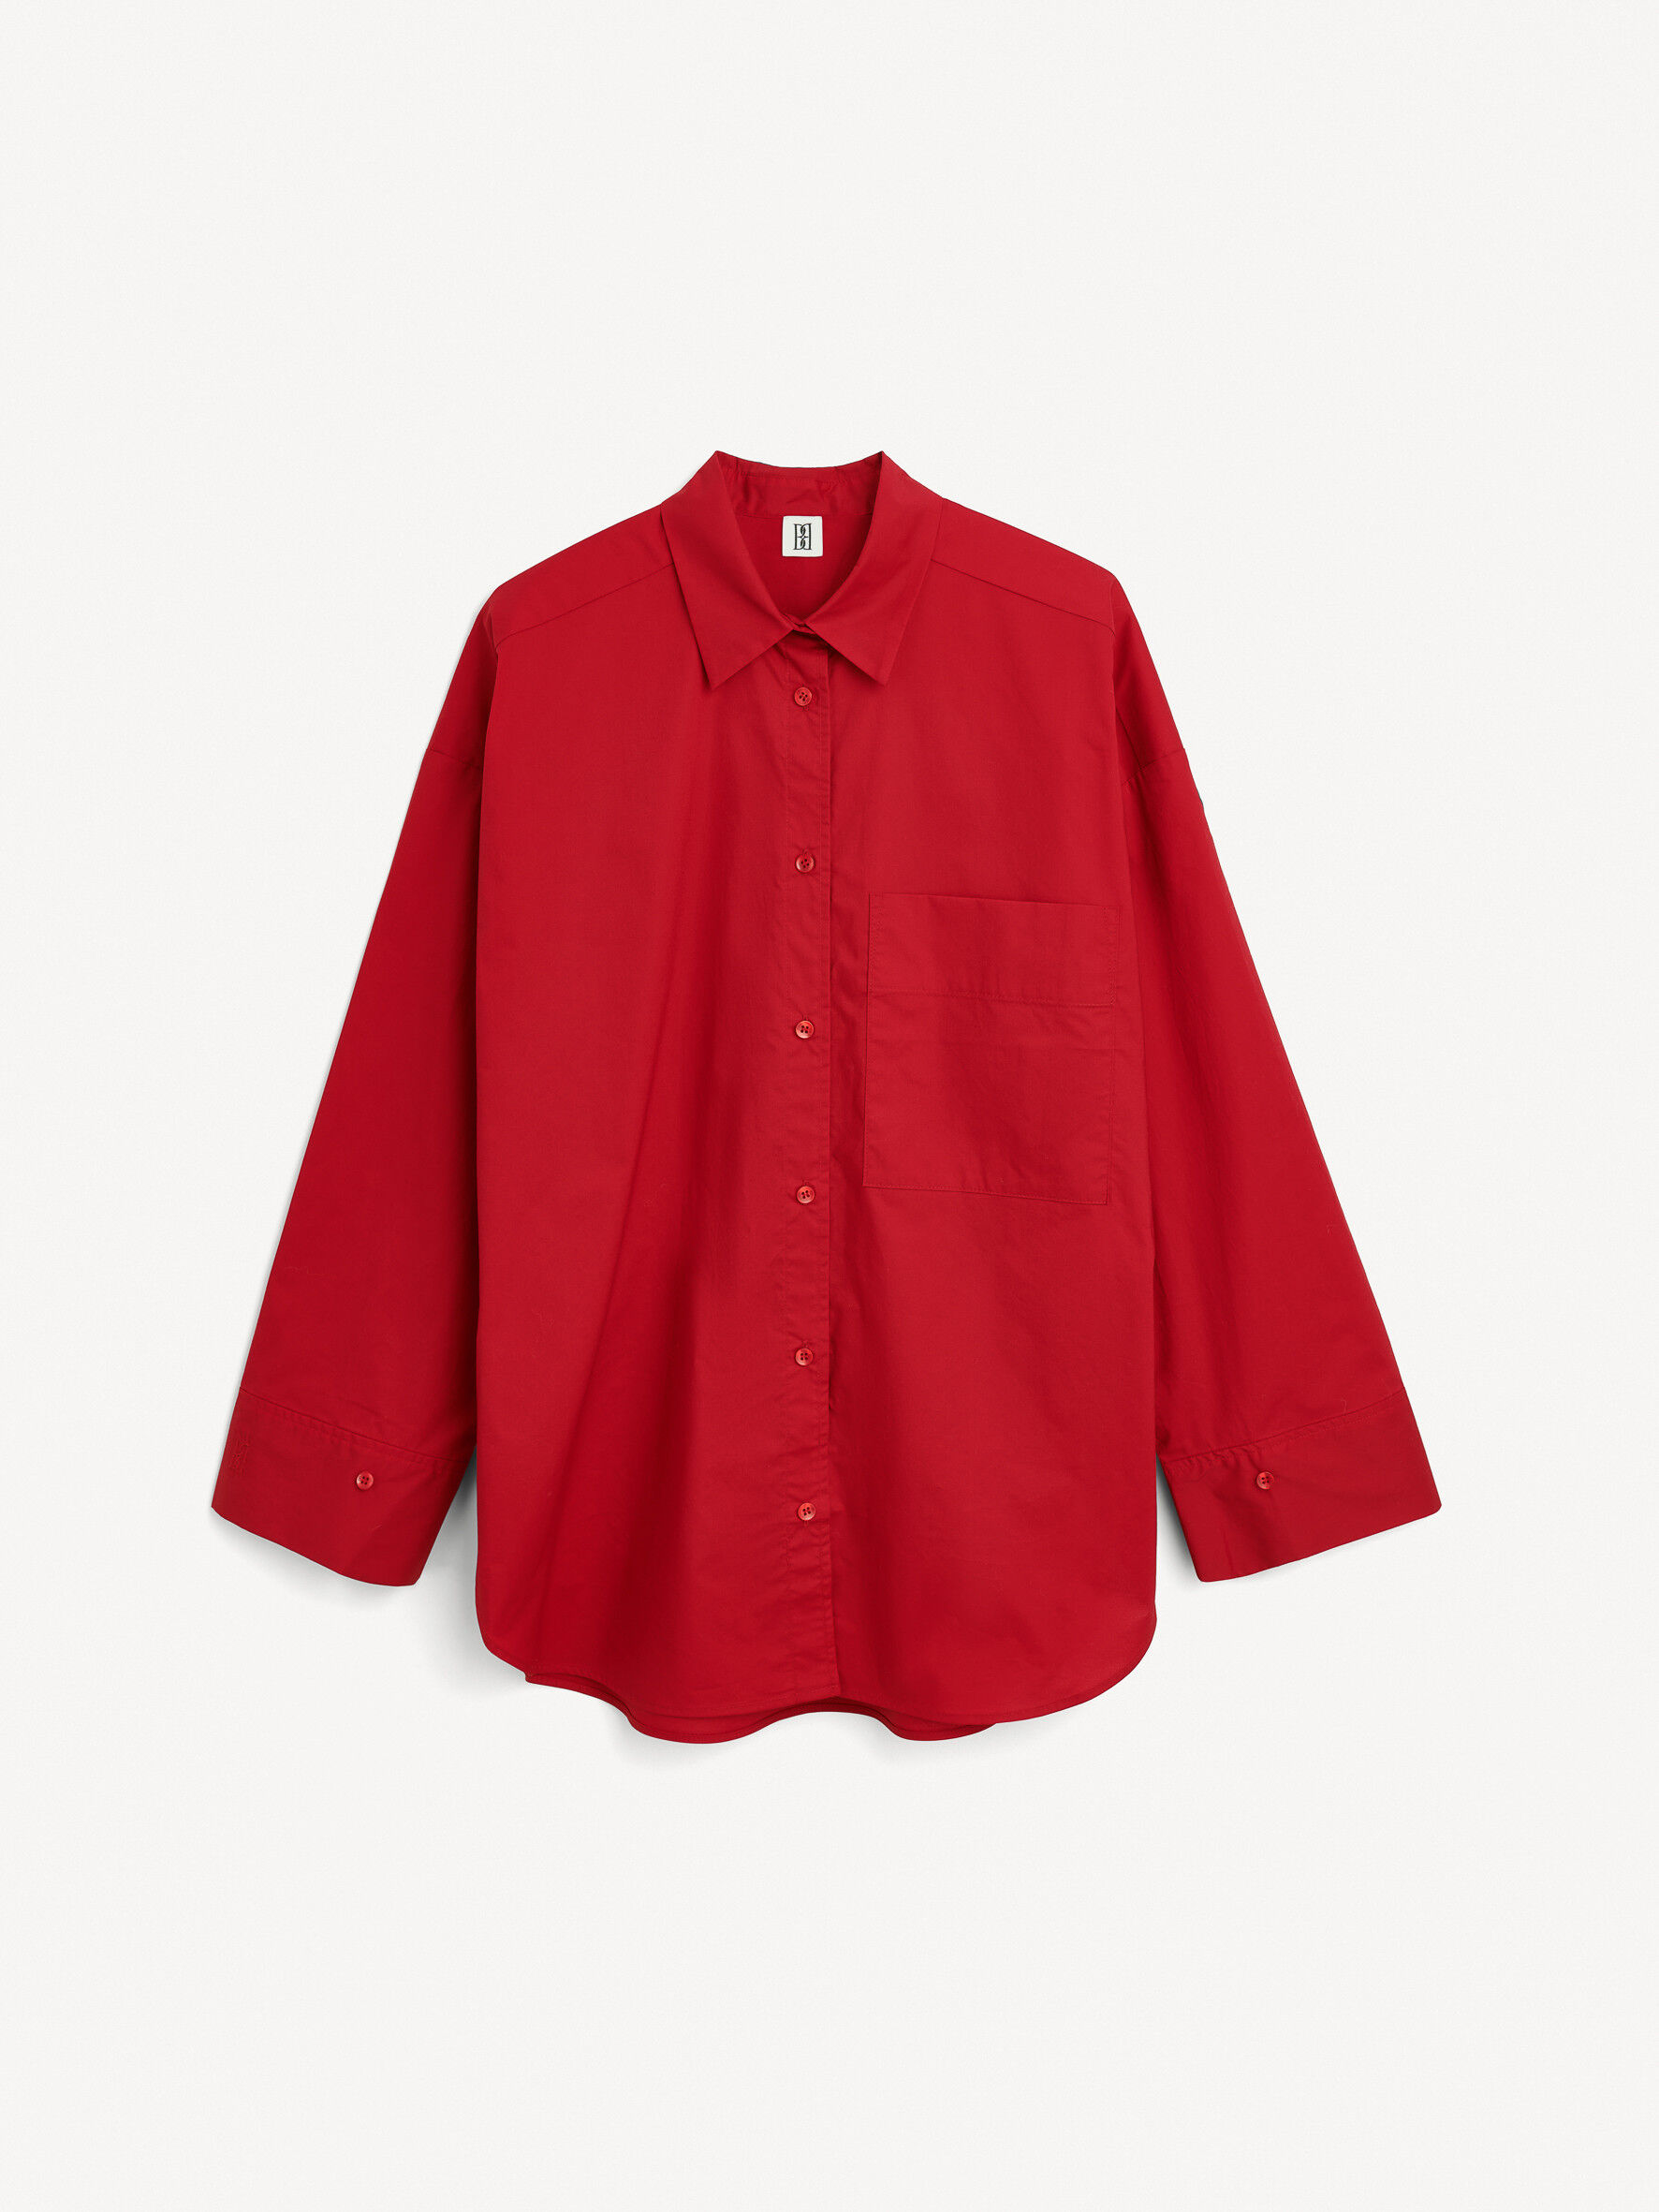 Derris organic cotton shirt - Buy Clothing online